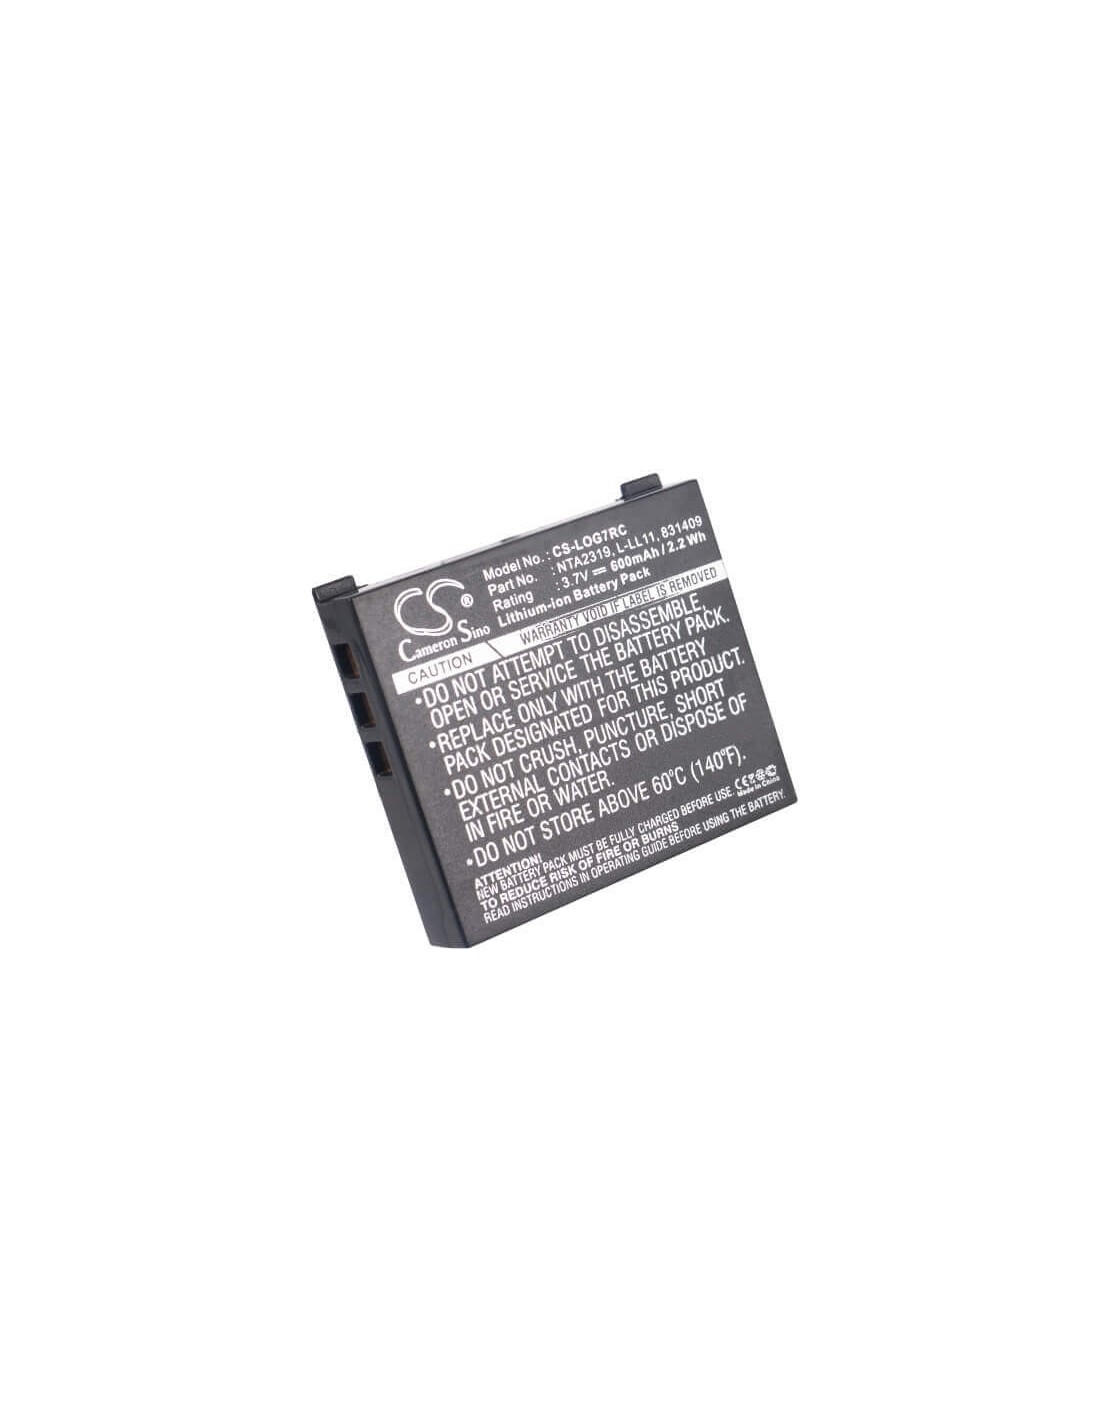 Battery for Logitech G7 Laser Cordless Mouse, Mx Air, M-rbq124 3.7V, 600mAh - 2.22Wh